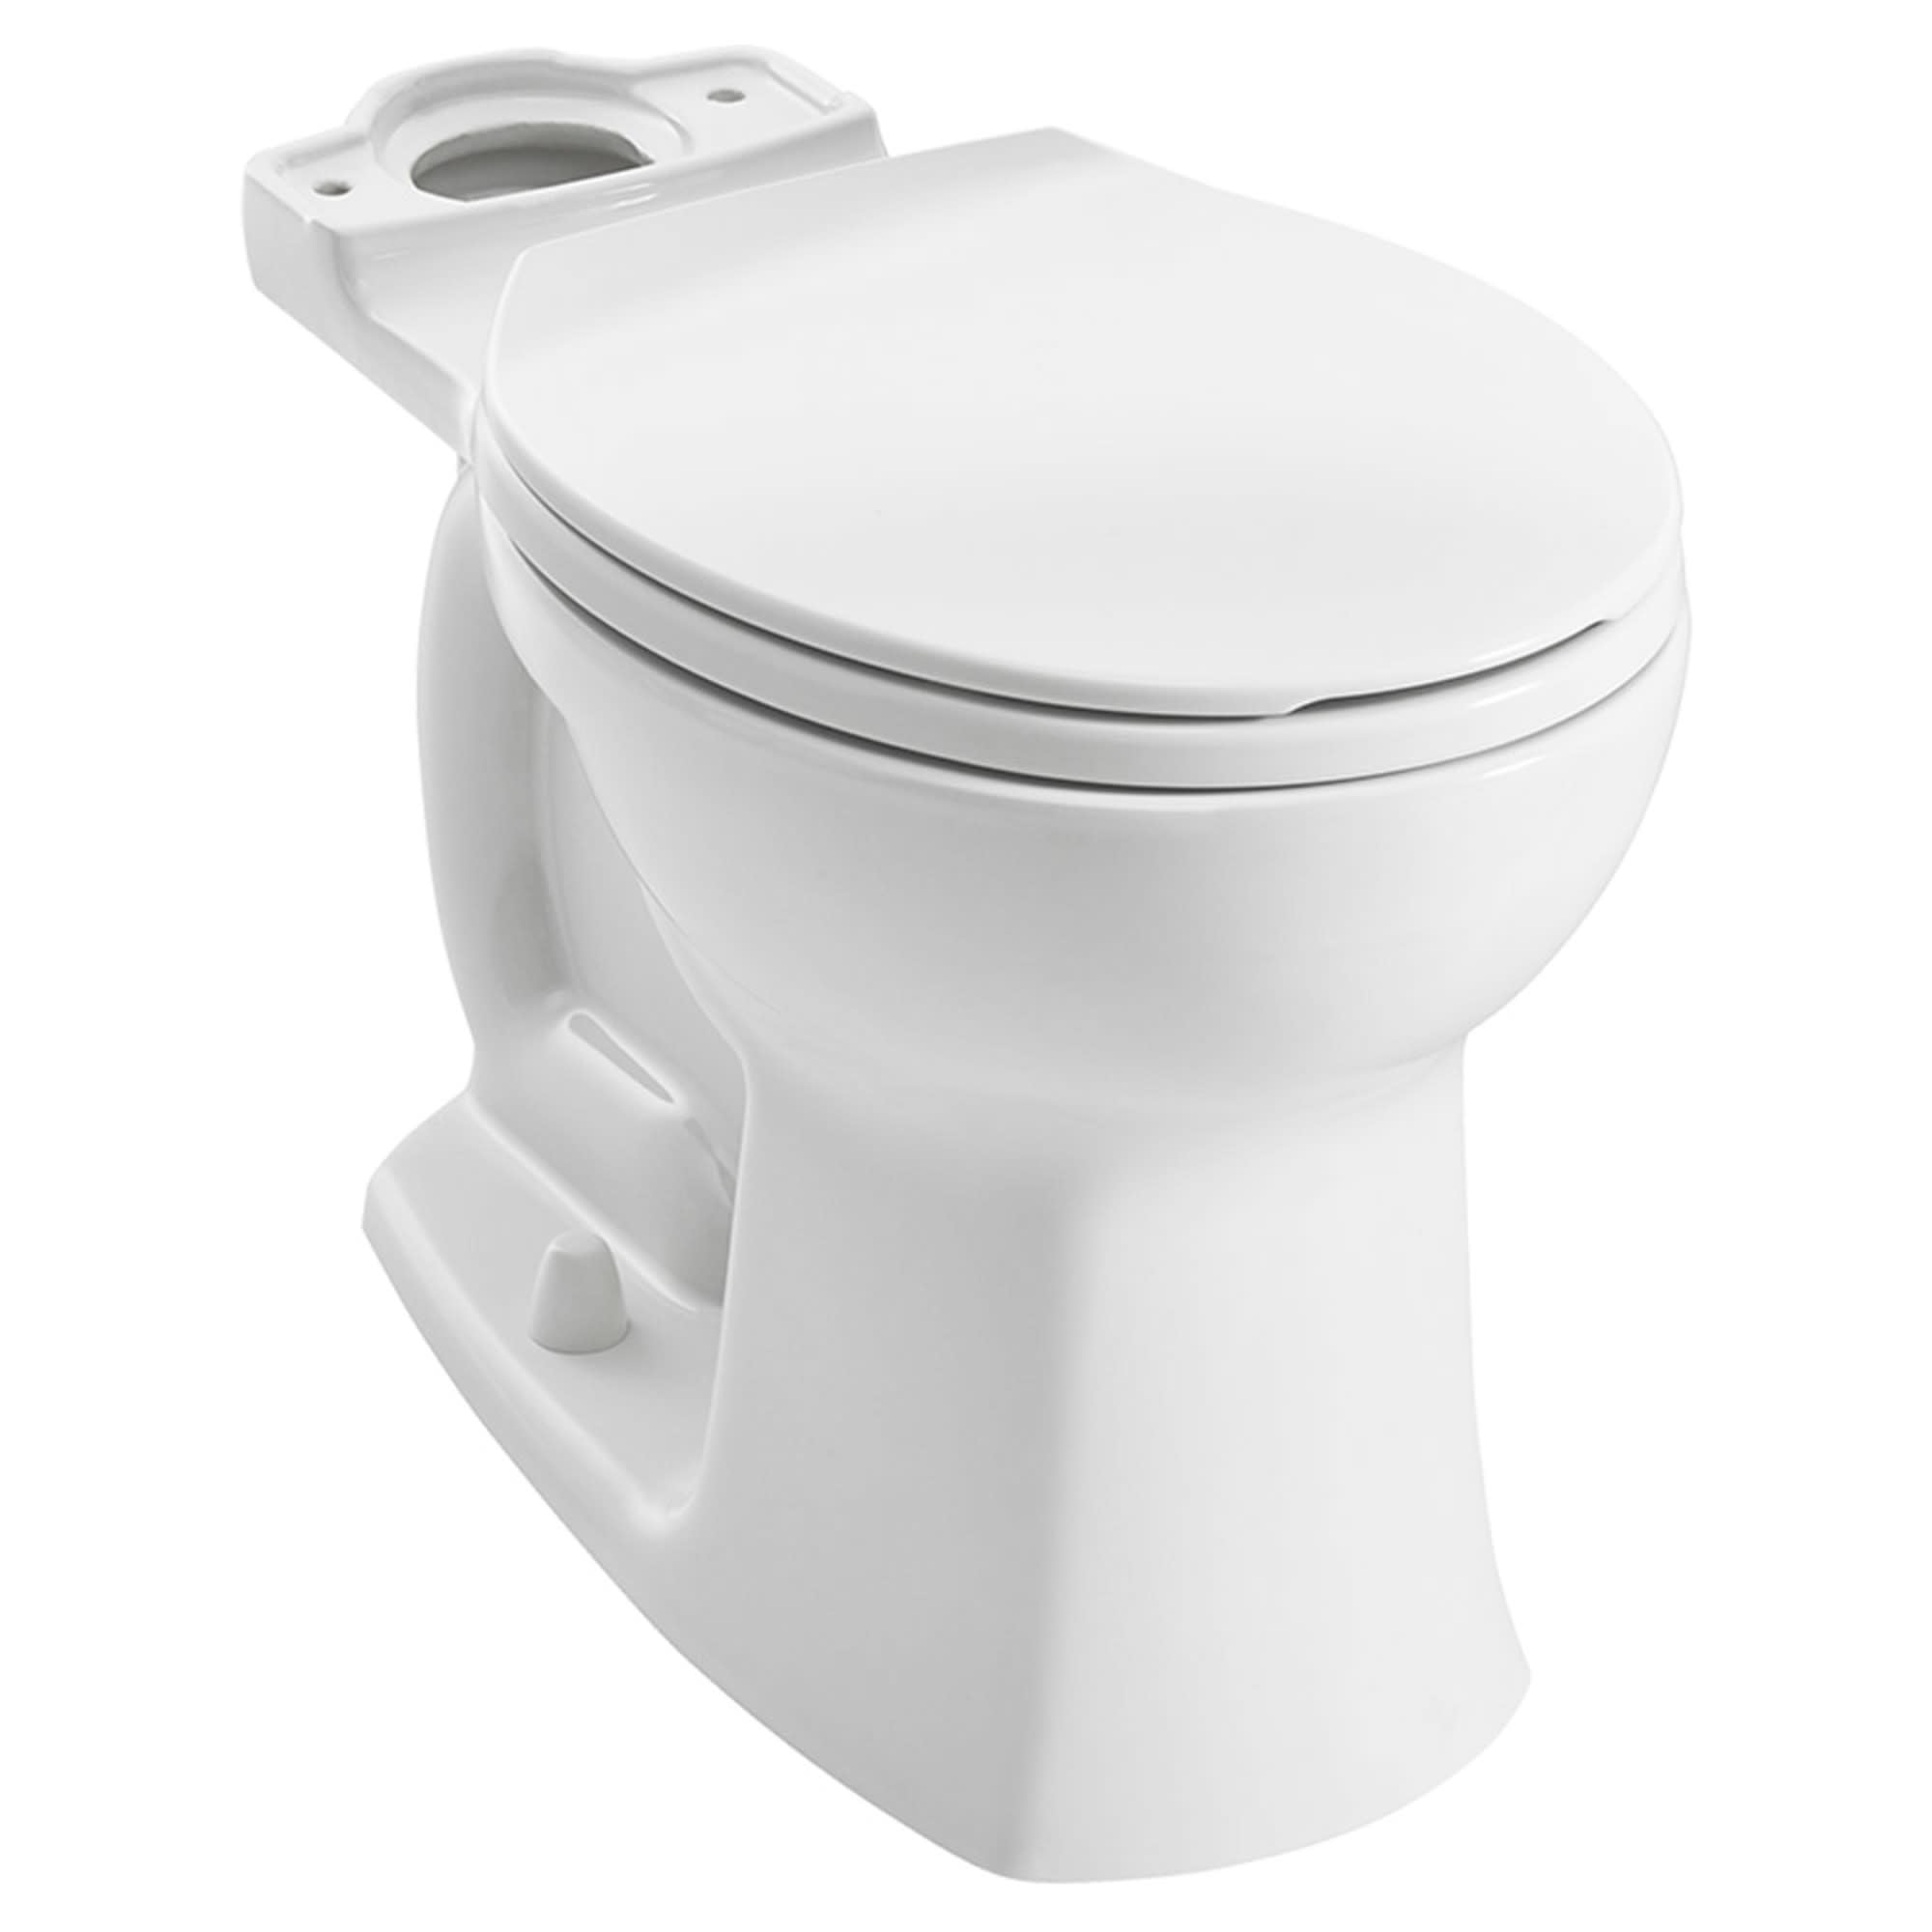 American Standard 3519b101 Edgemere Round Comfort Height Toilet Bowl